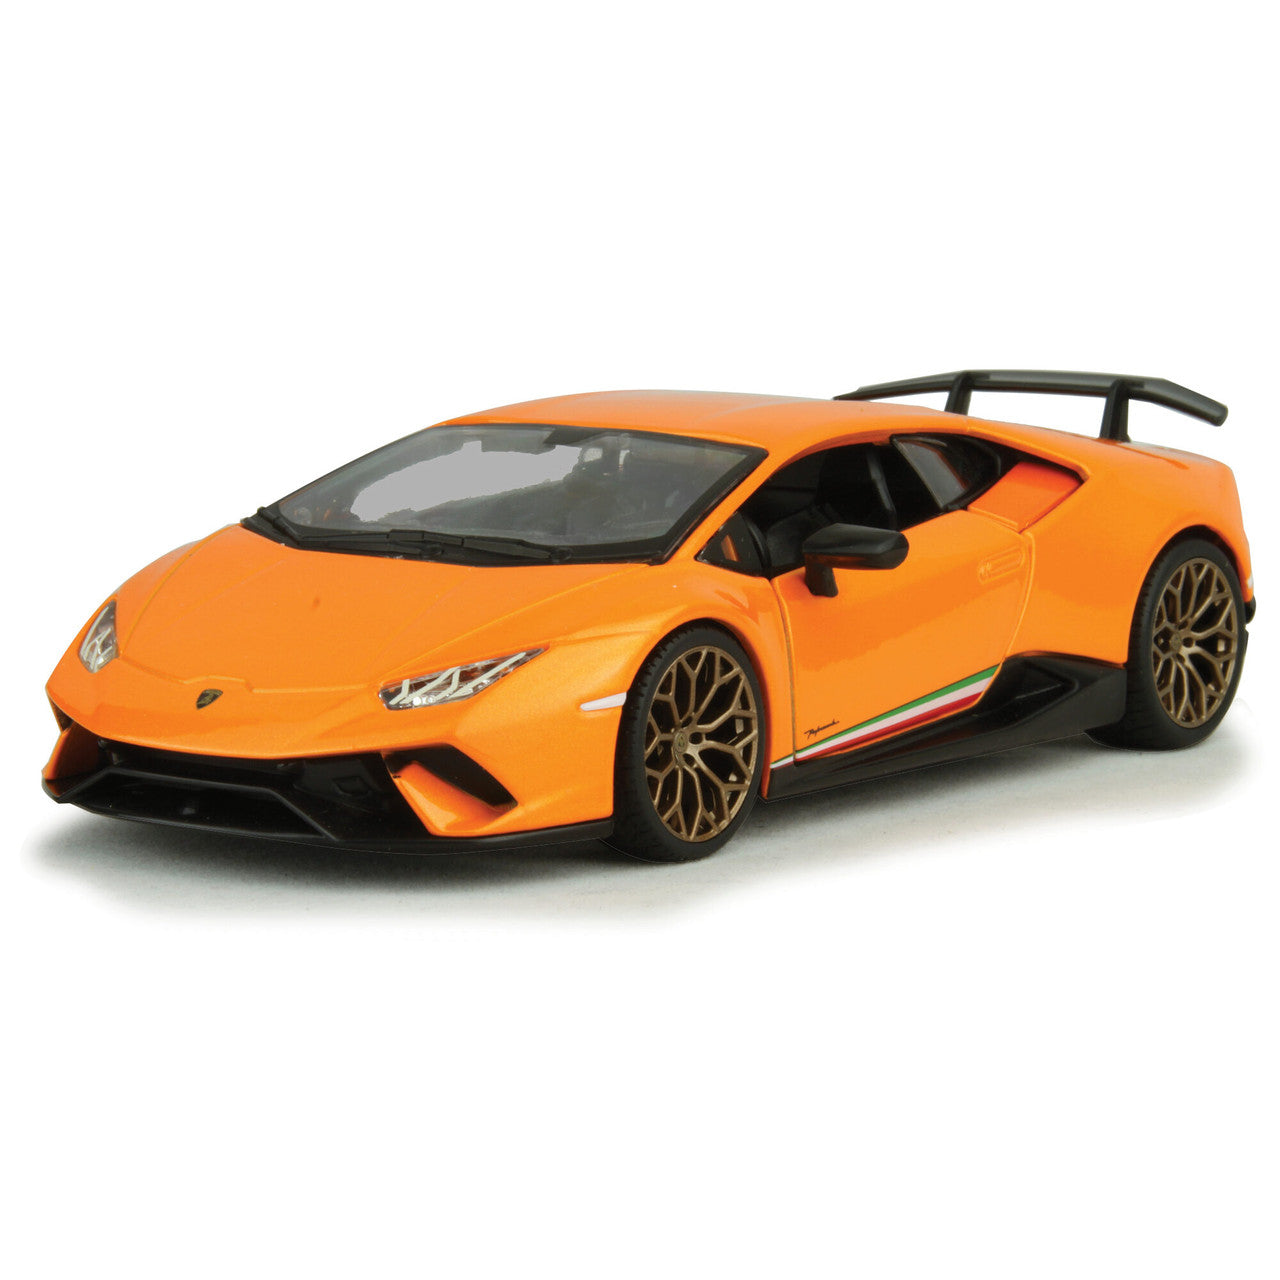 diecast car of an orange Lamborghini Huracan Performante